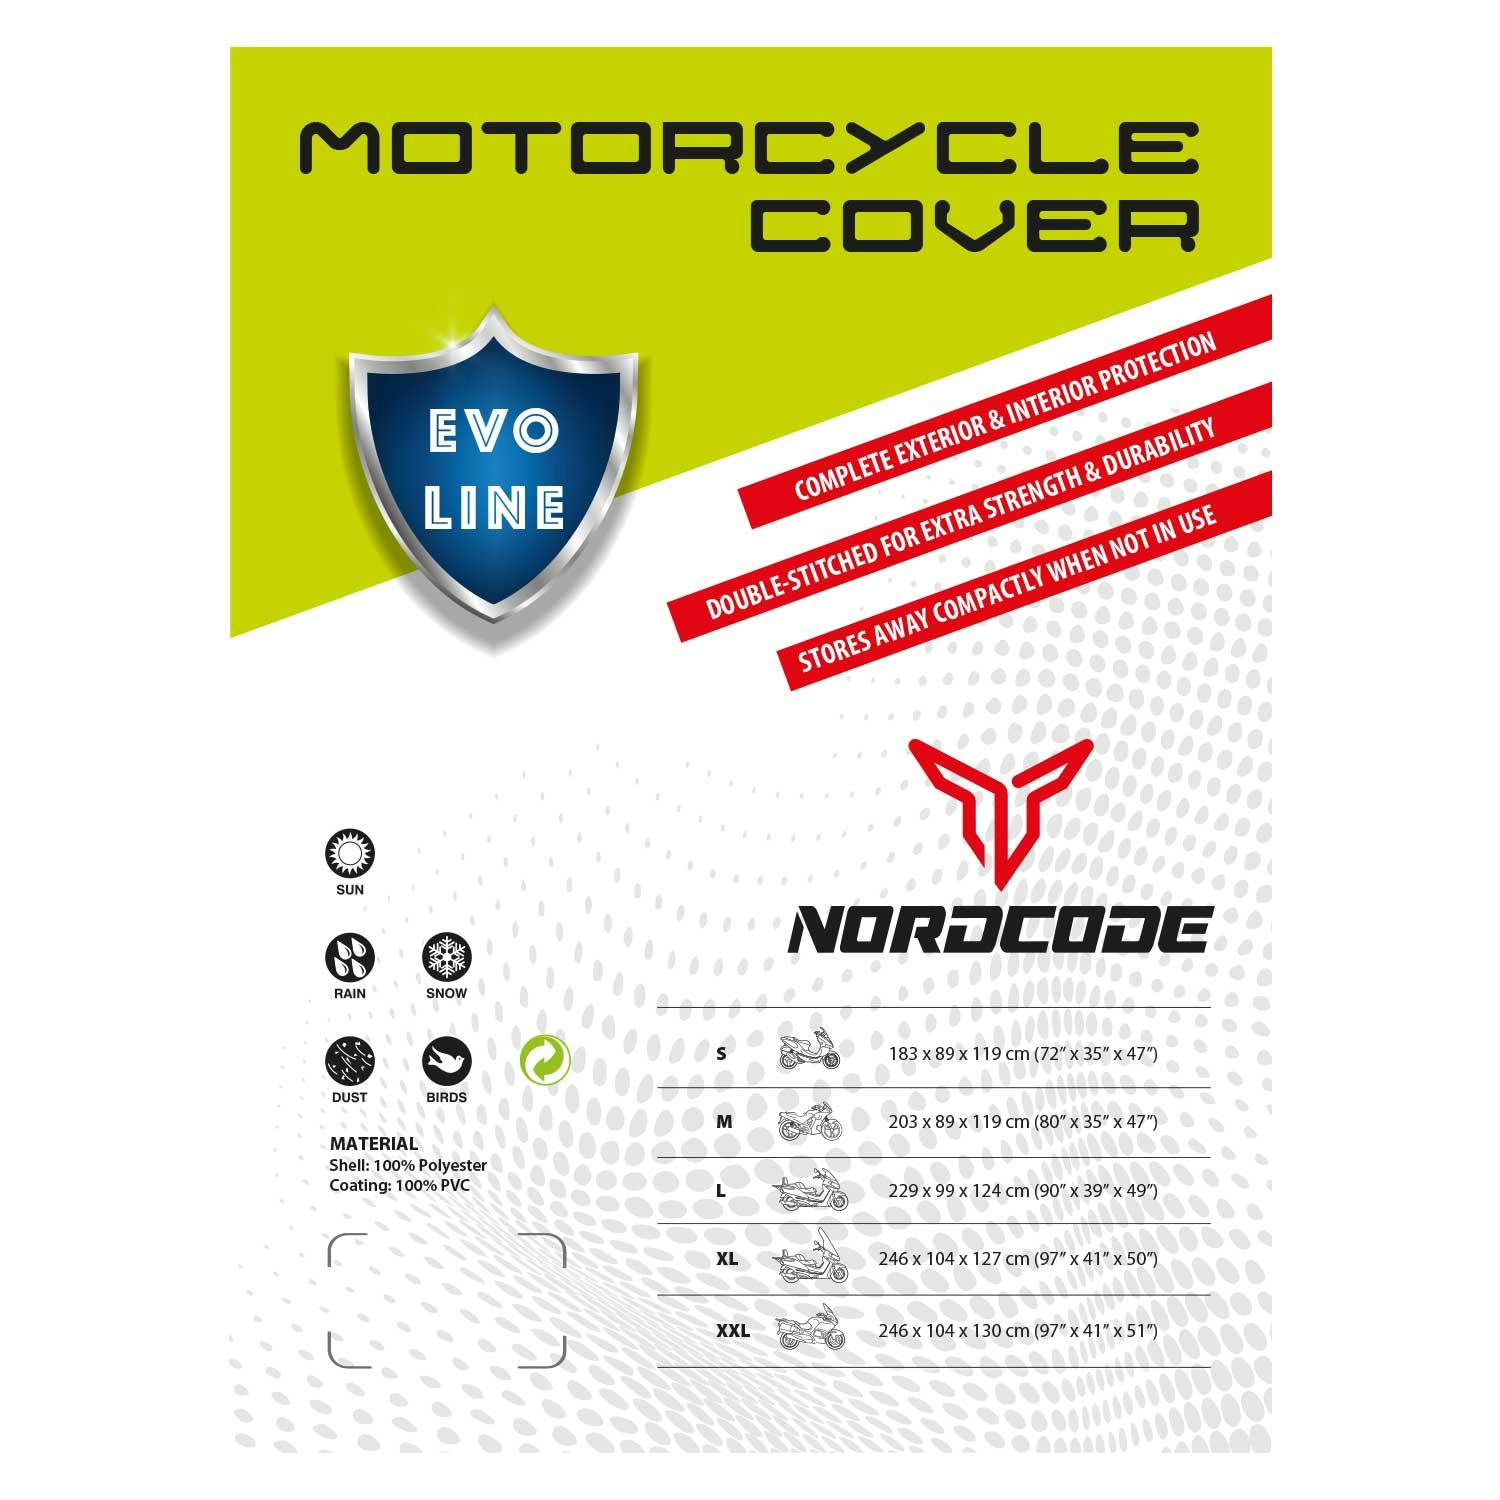 NORDCODE - Kάλυμμα μοτό αδιαβροχο Nordcode Evo Line M 203*89*119